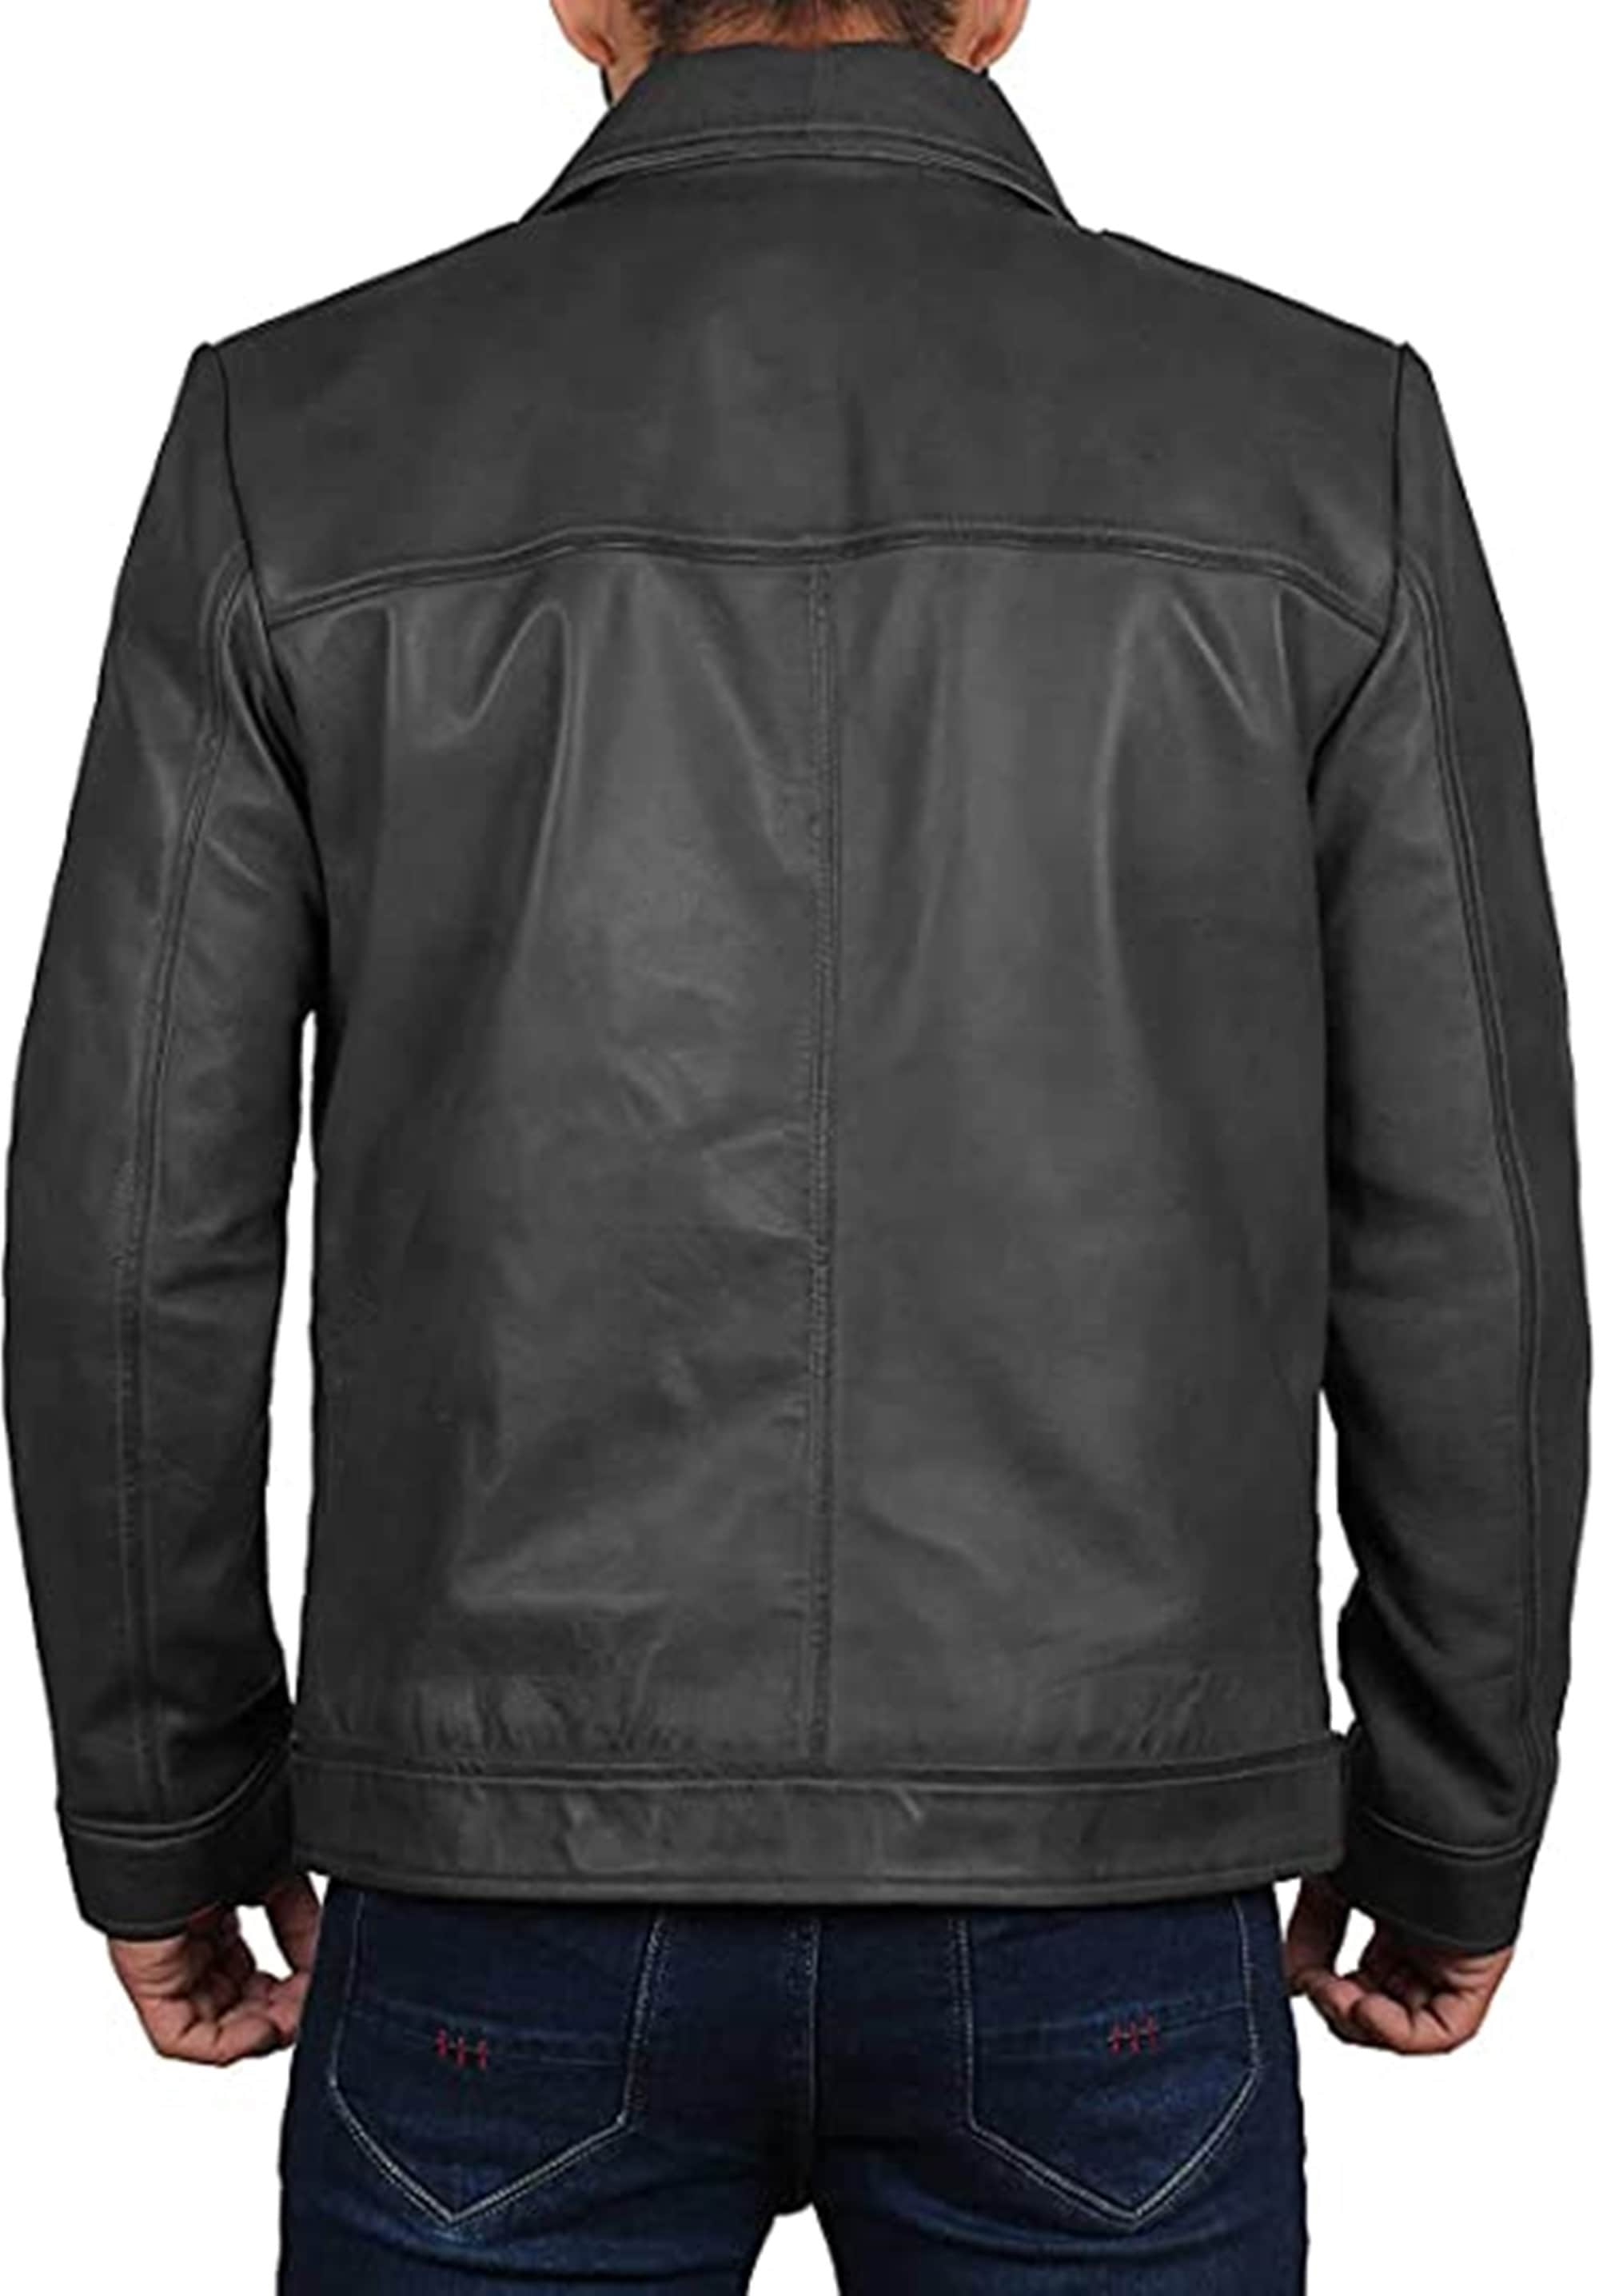 Motorcycle Black Leather Jacket For Men